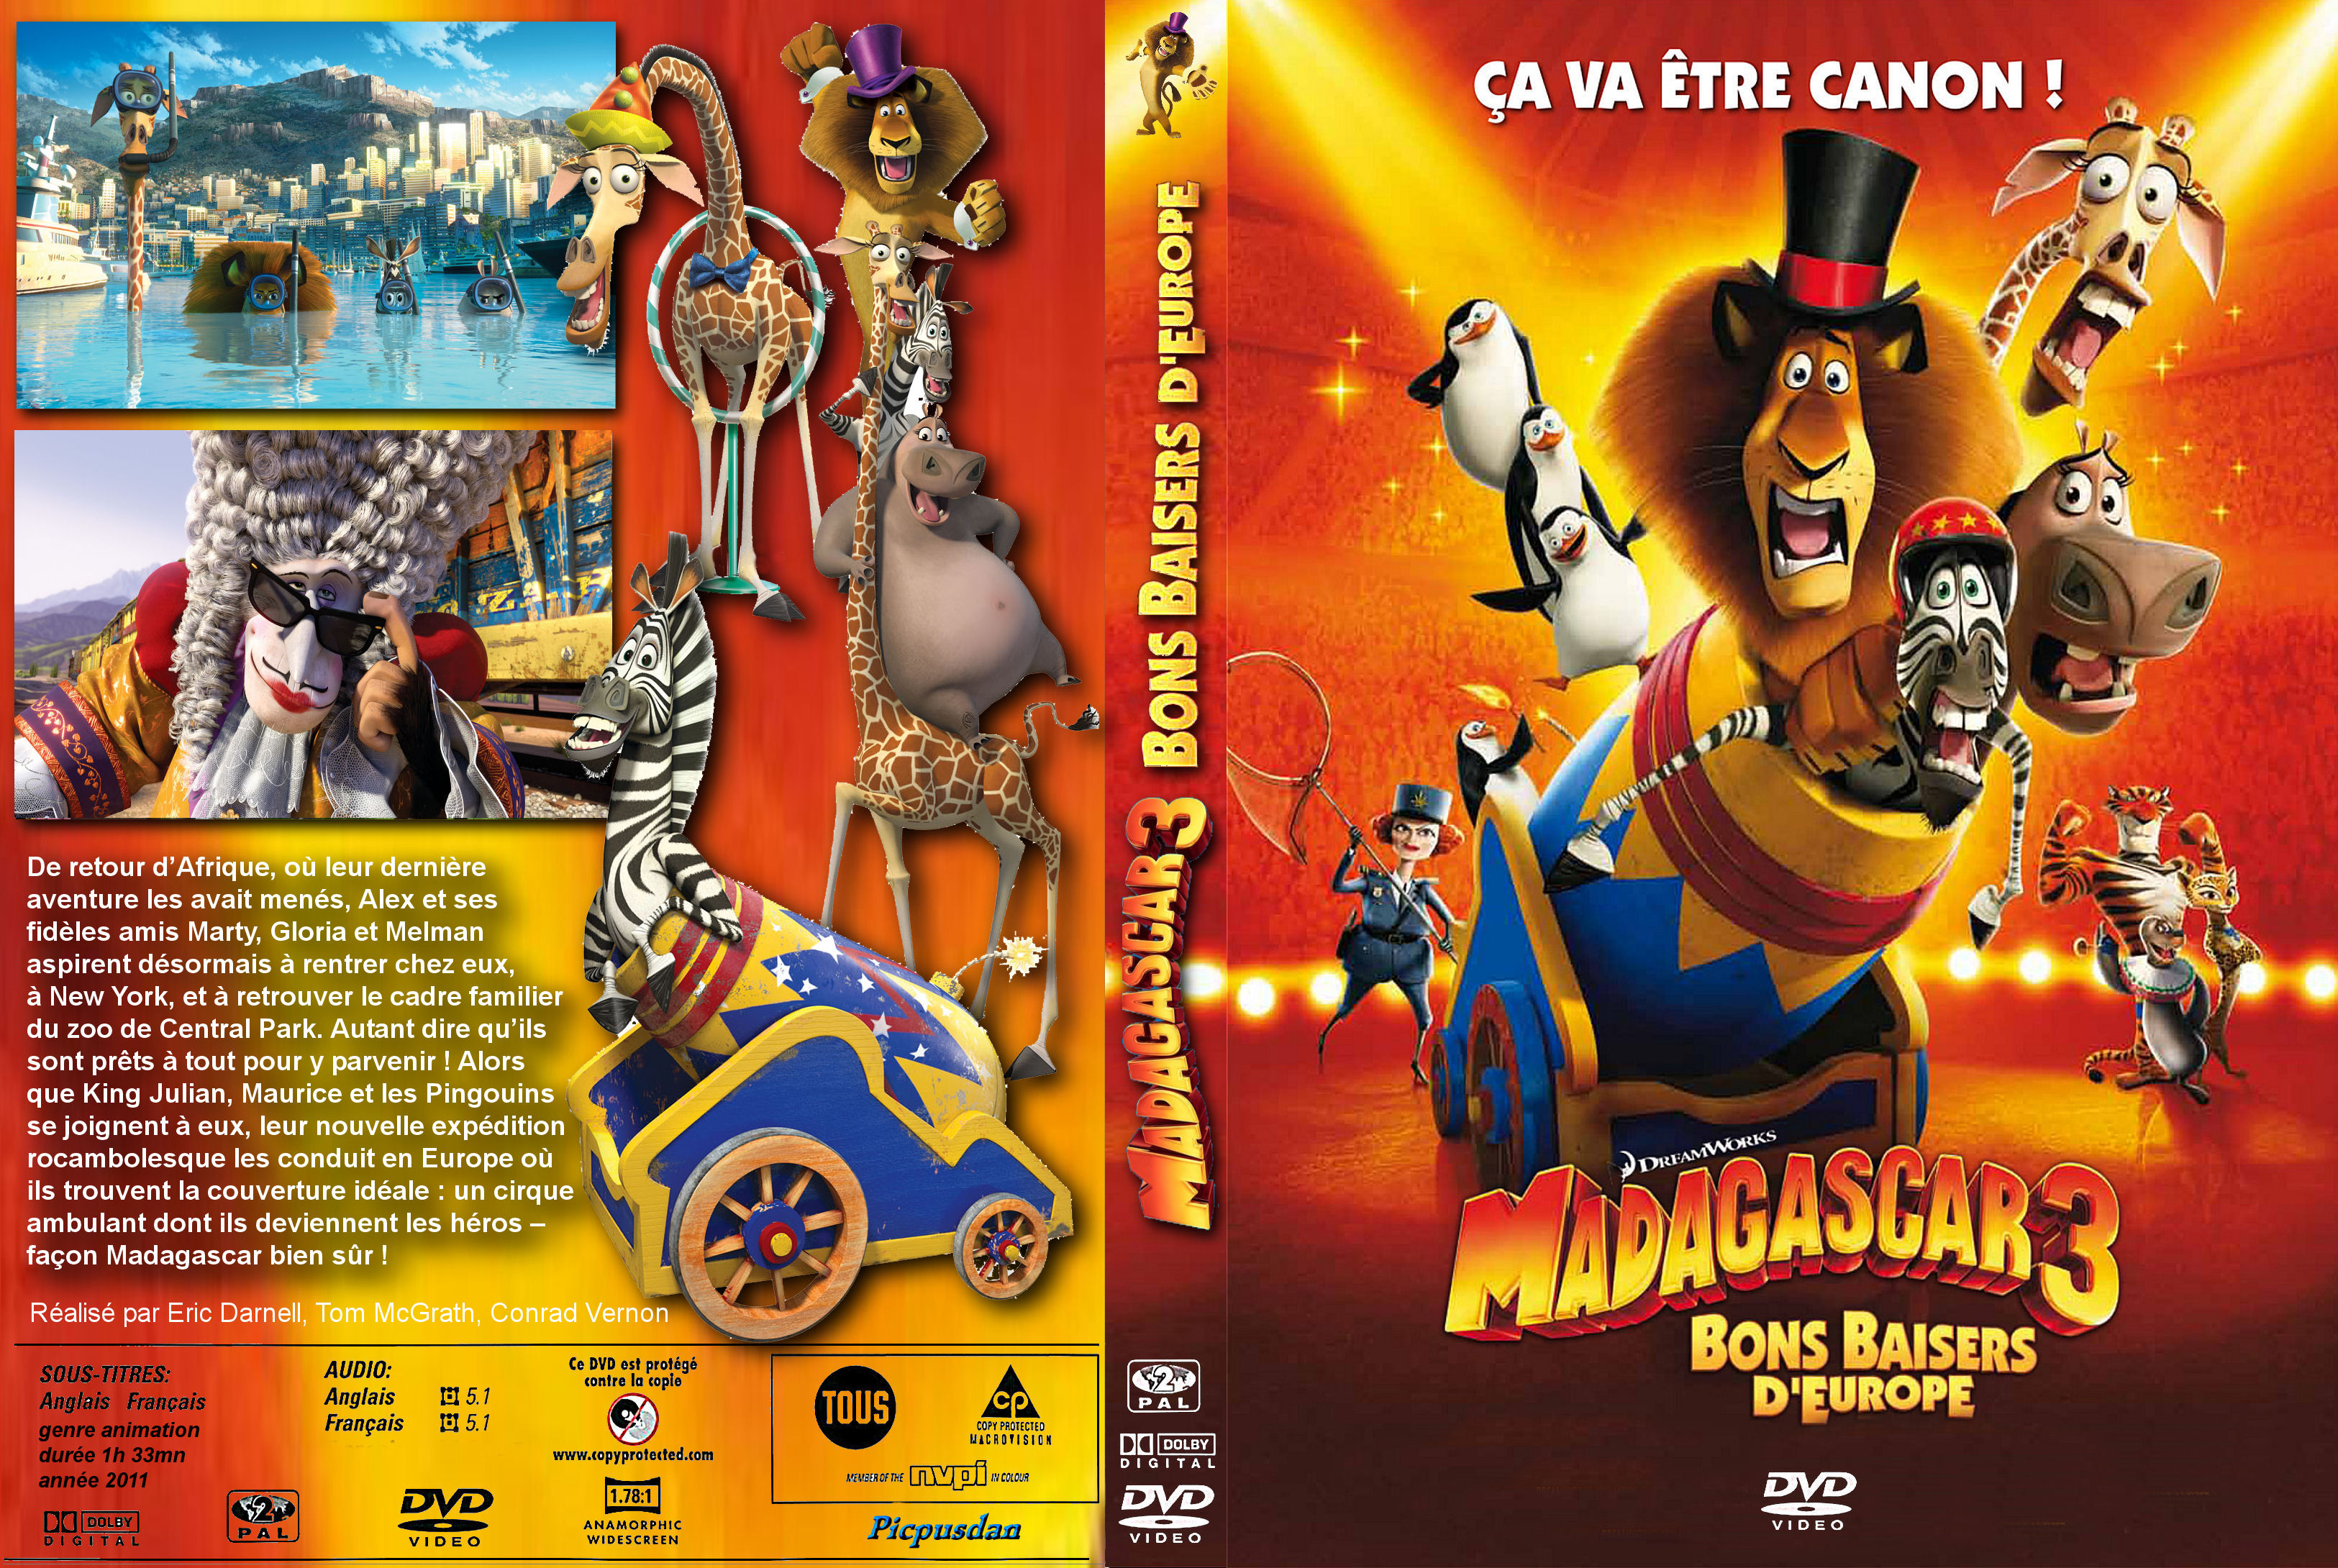 Jaquette DVD Madagascar 3 custom